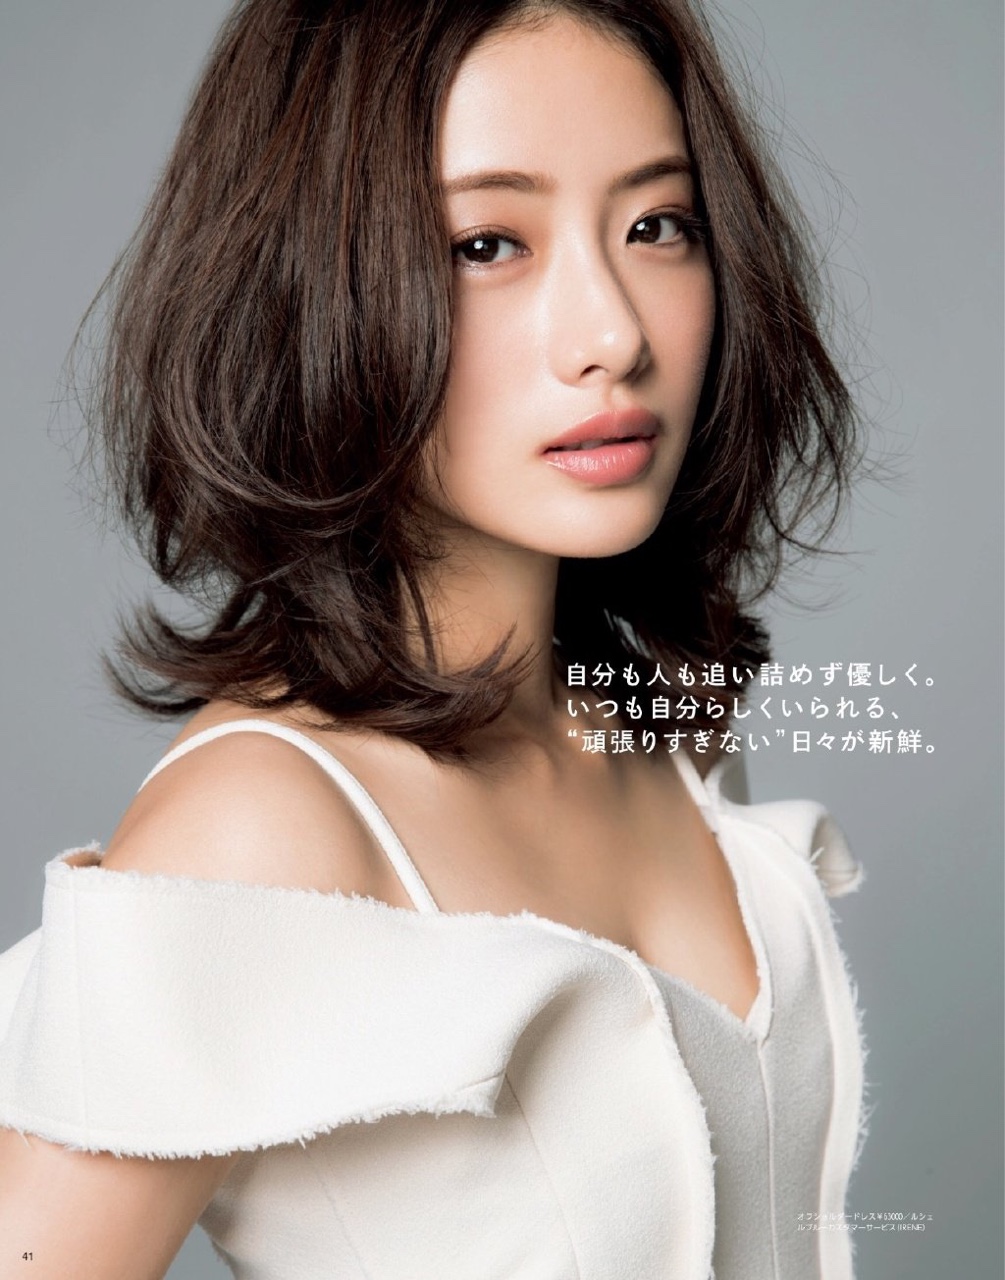 Ishihara Satomi is an attractive human being in May 2017’s Maquia ...